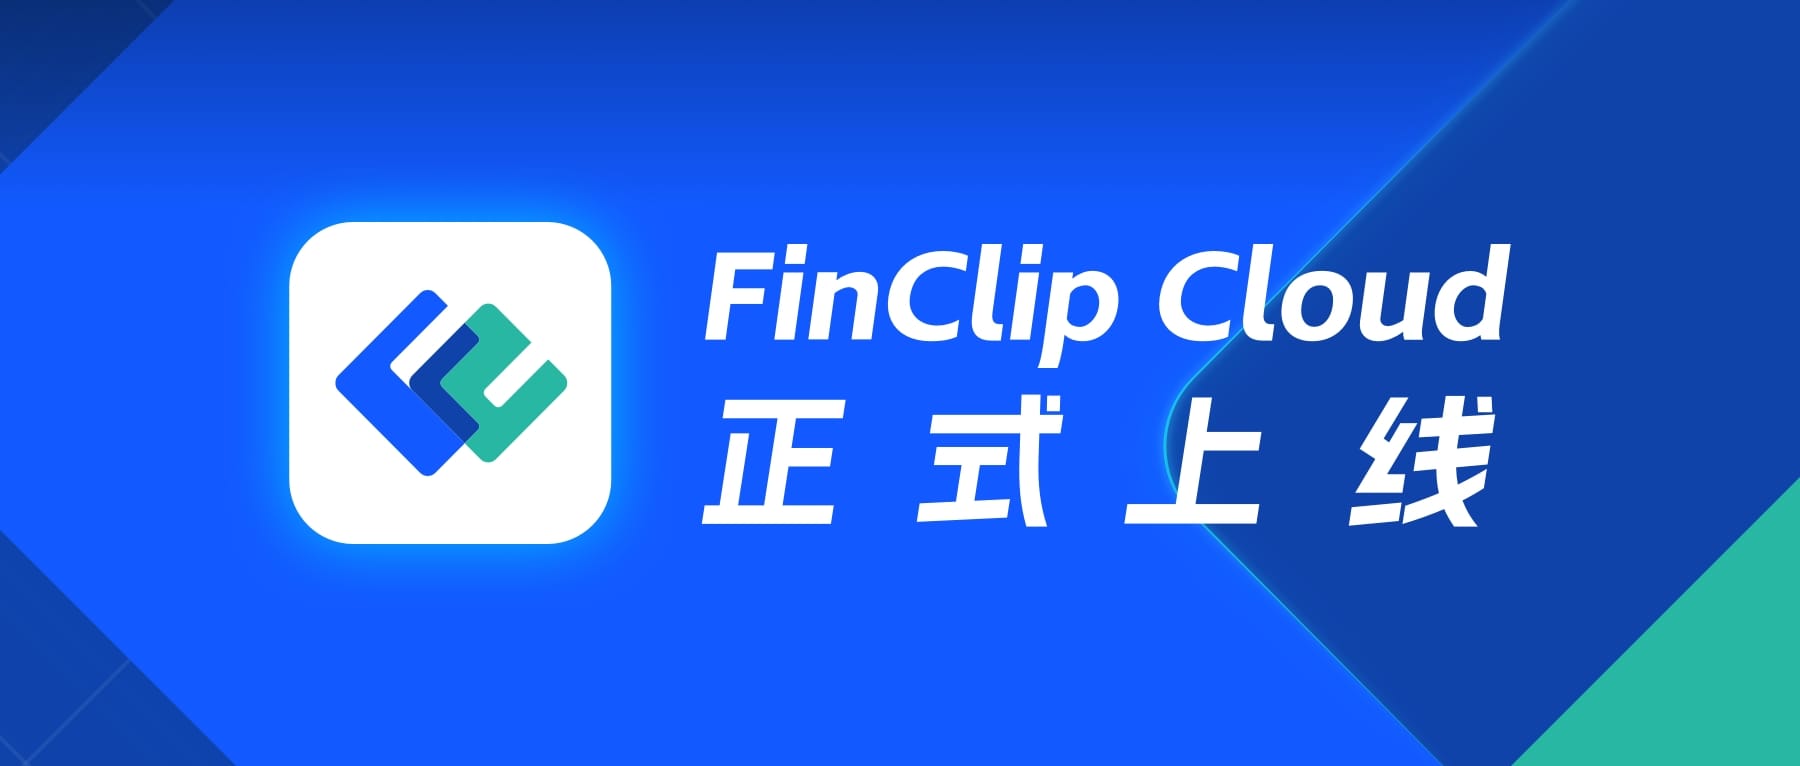 FinClip Cloud 正式上线